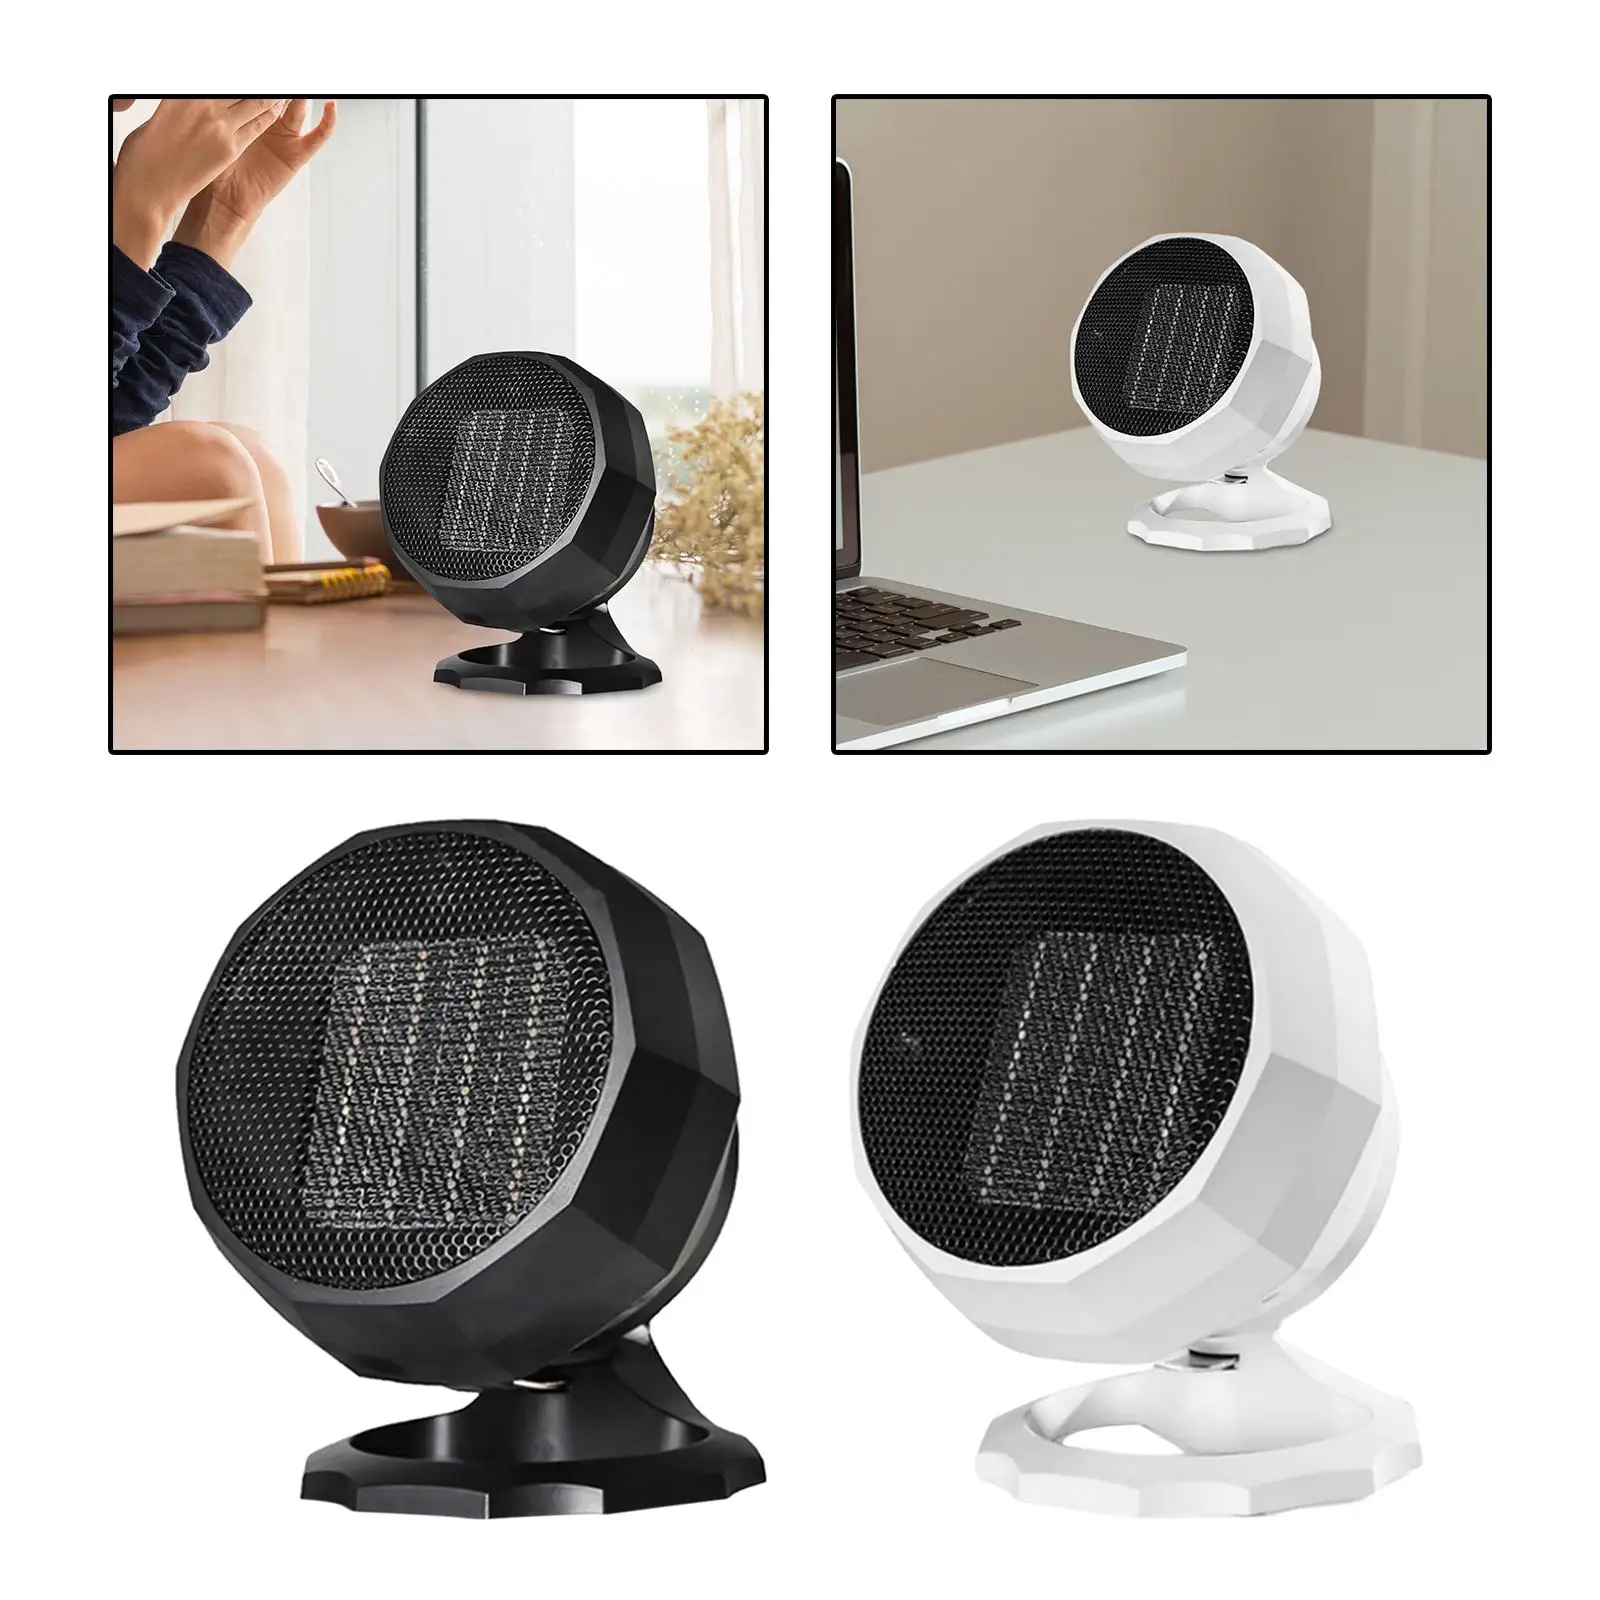 Desktop Electric Space Heater 180° Adjustable up and Down Desk Winter Heating Fan for Household Apartment Dorm Indoor EU Adapter